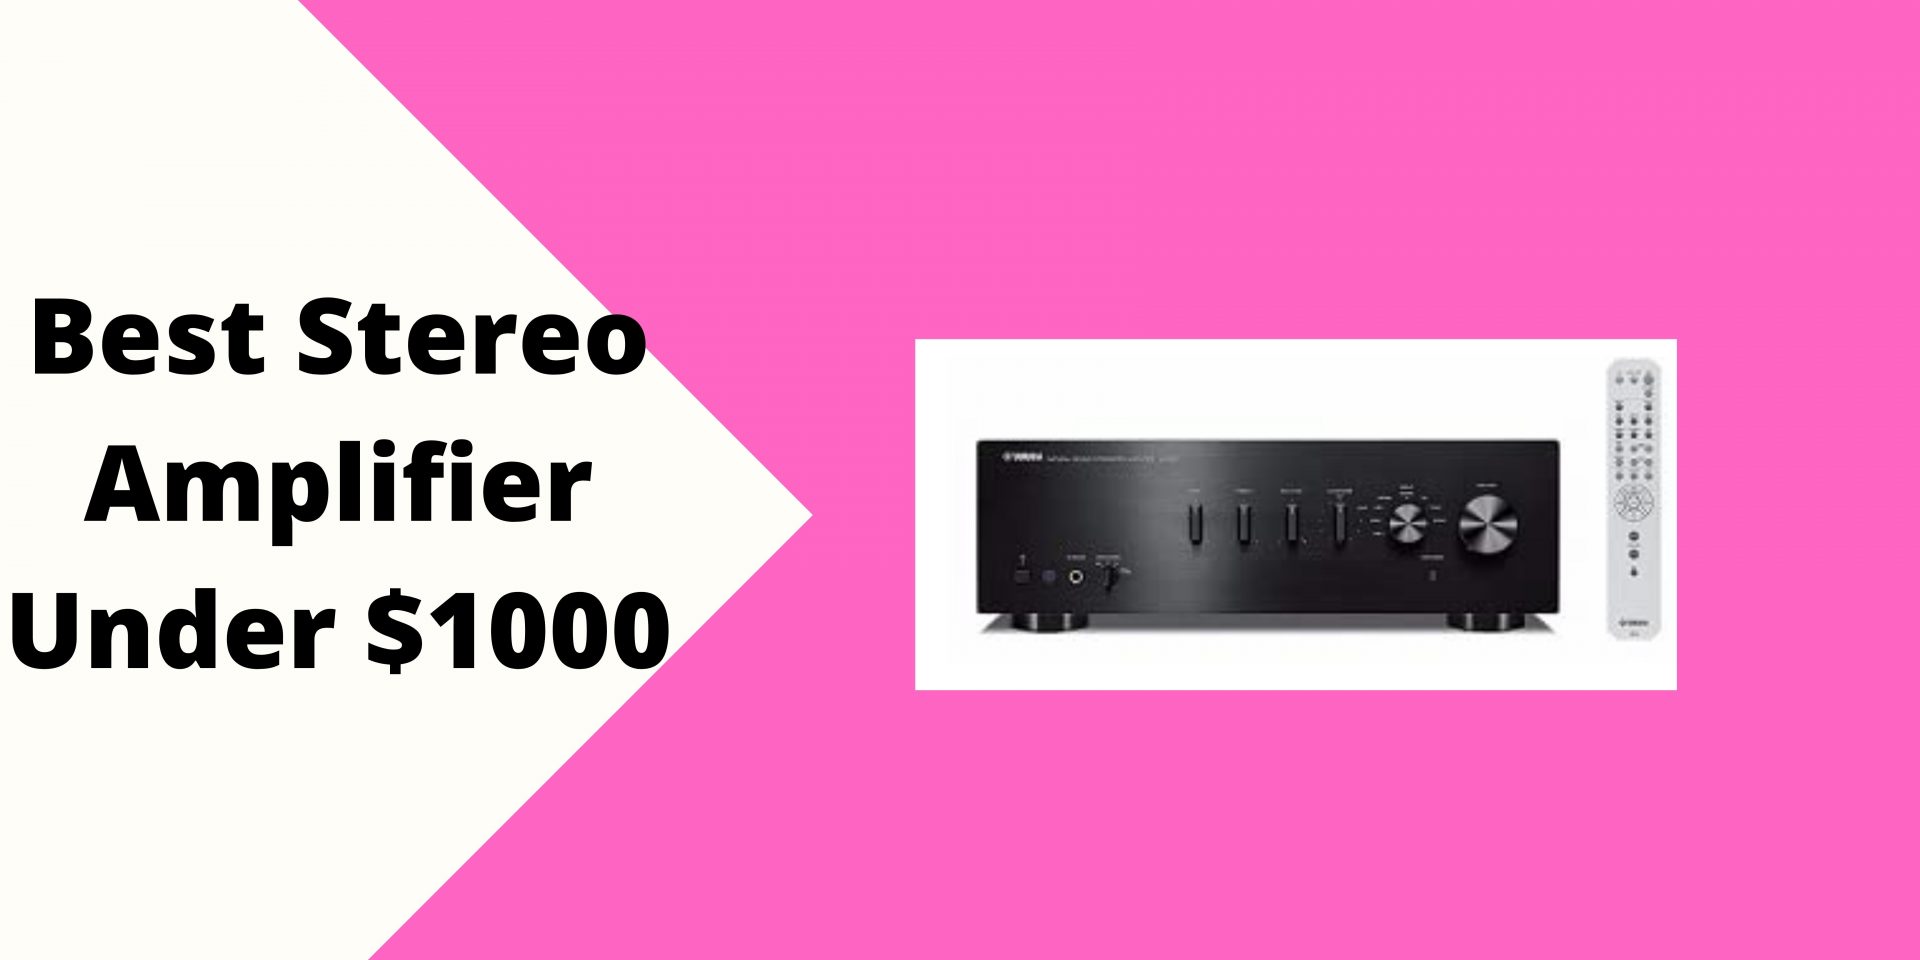 Best Stereo Amplifier Under $1000